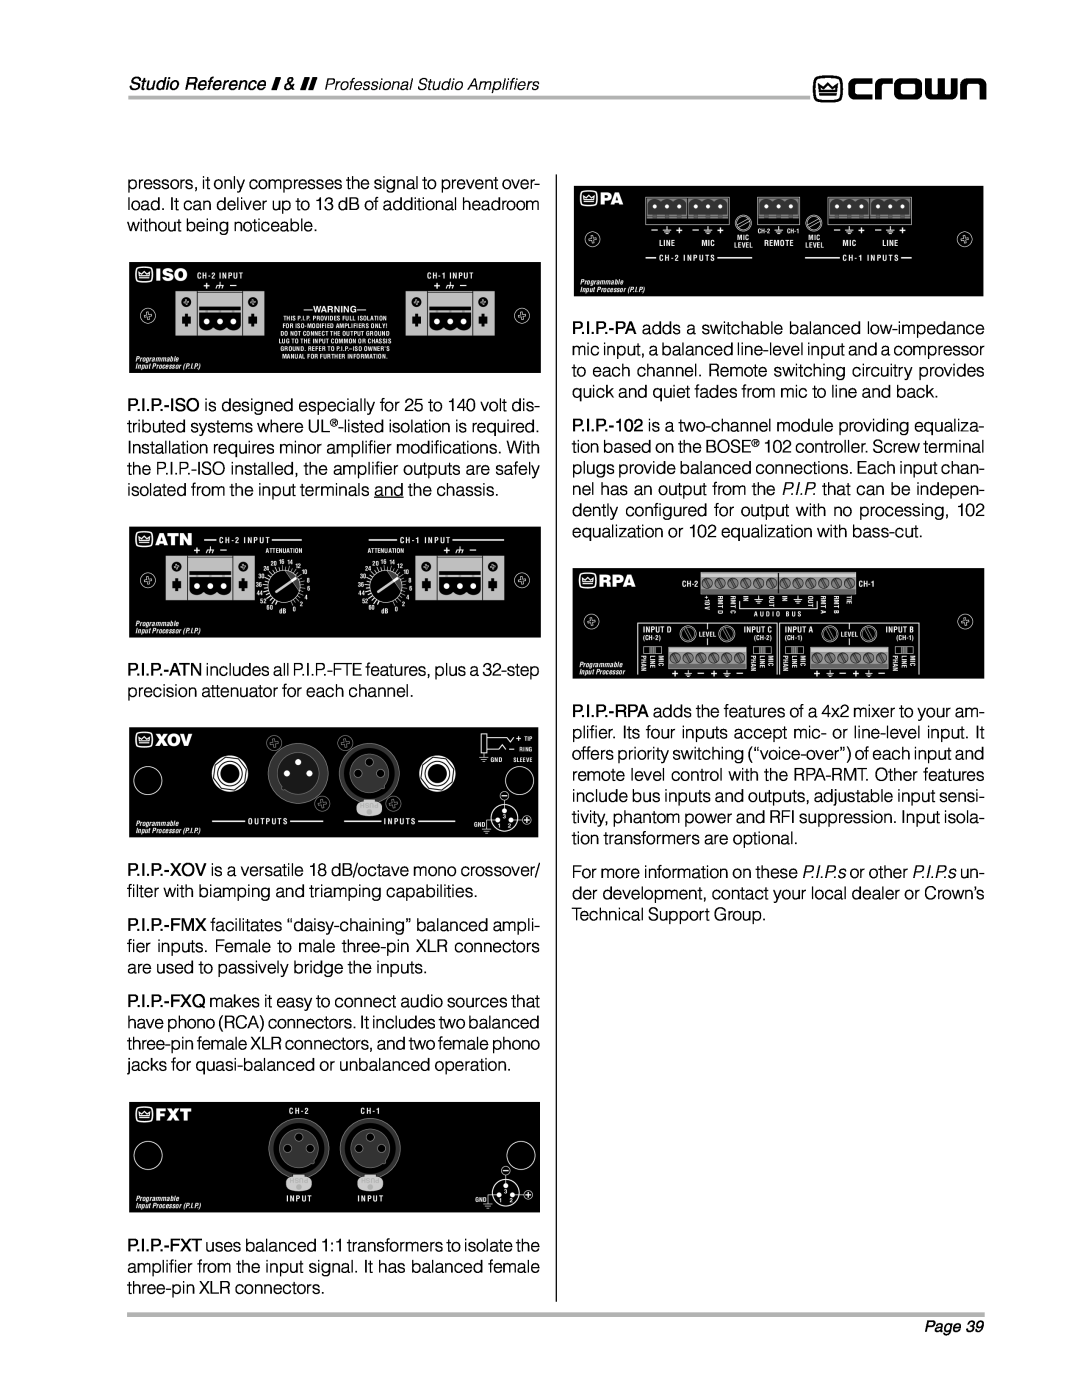 Crown Audio STUDIO AMPLIFIER owner manual Atn+ 